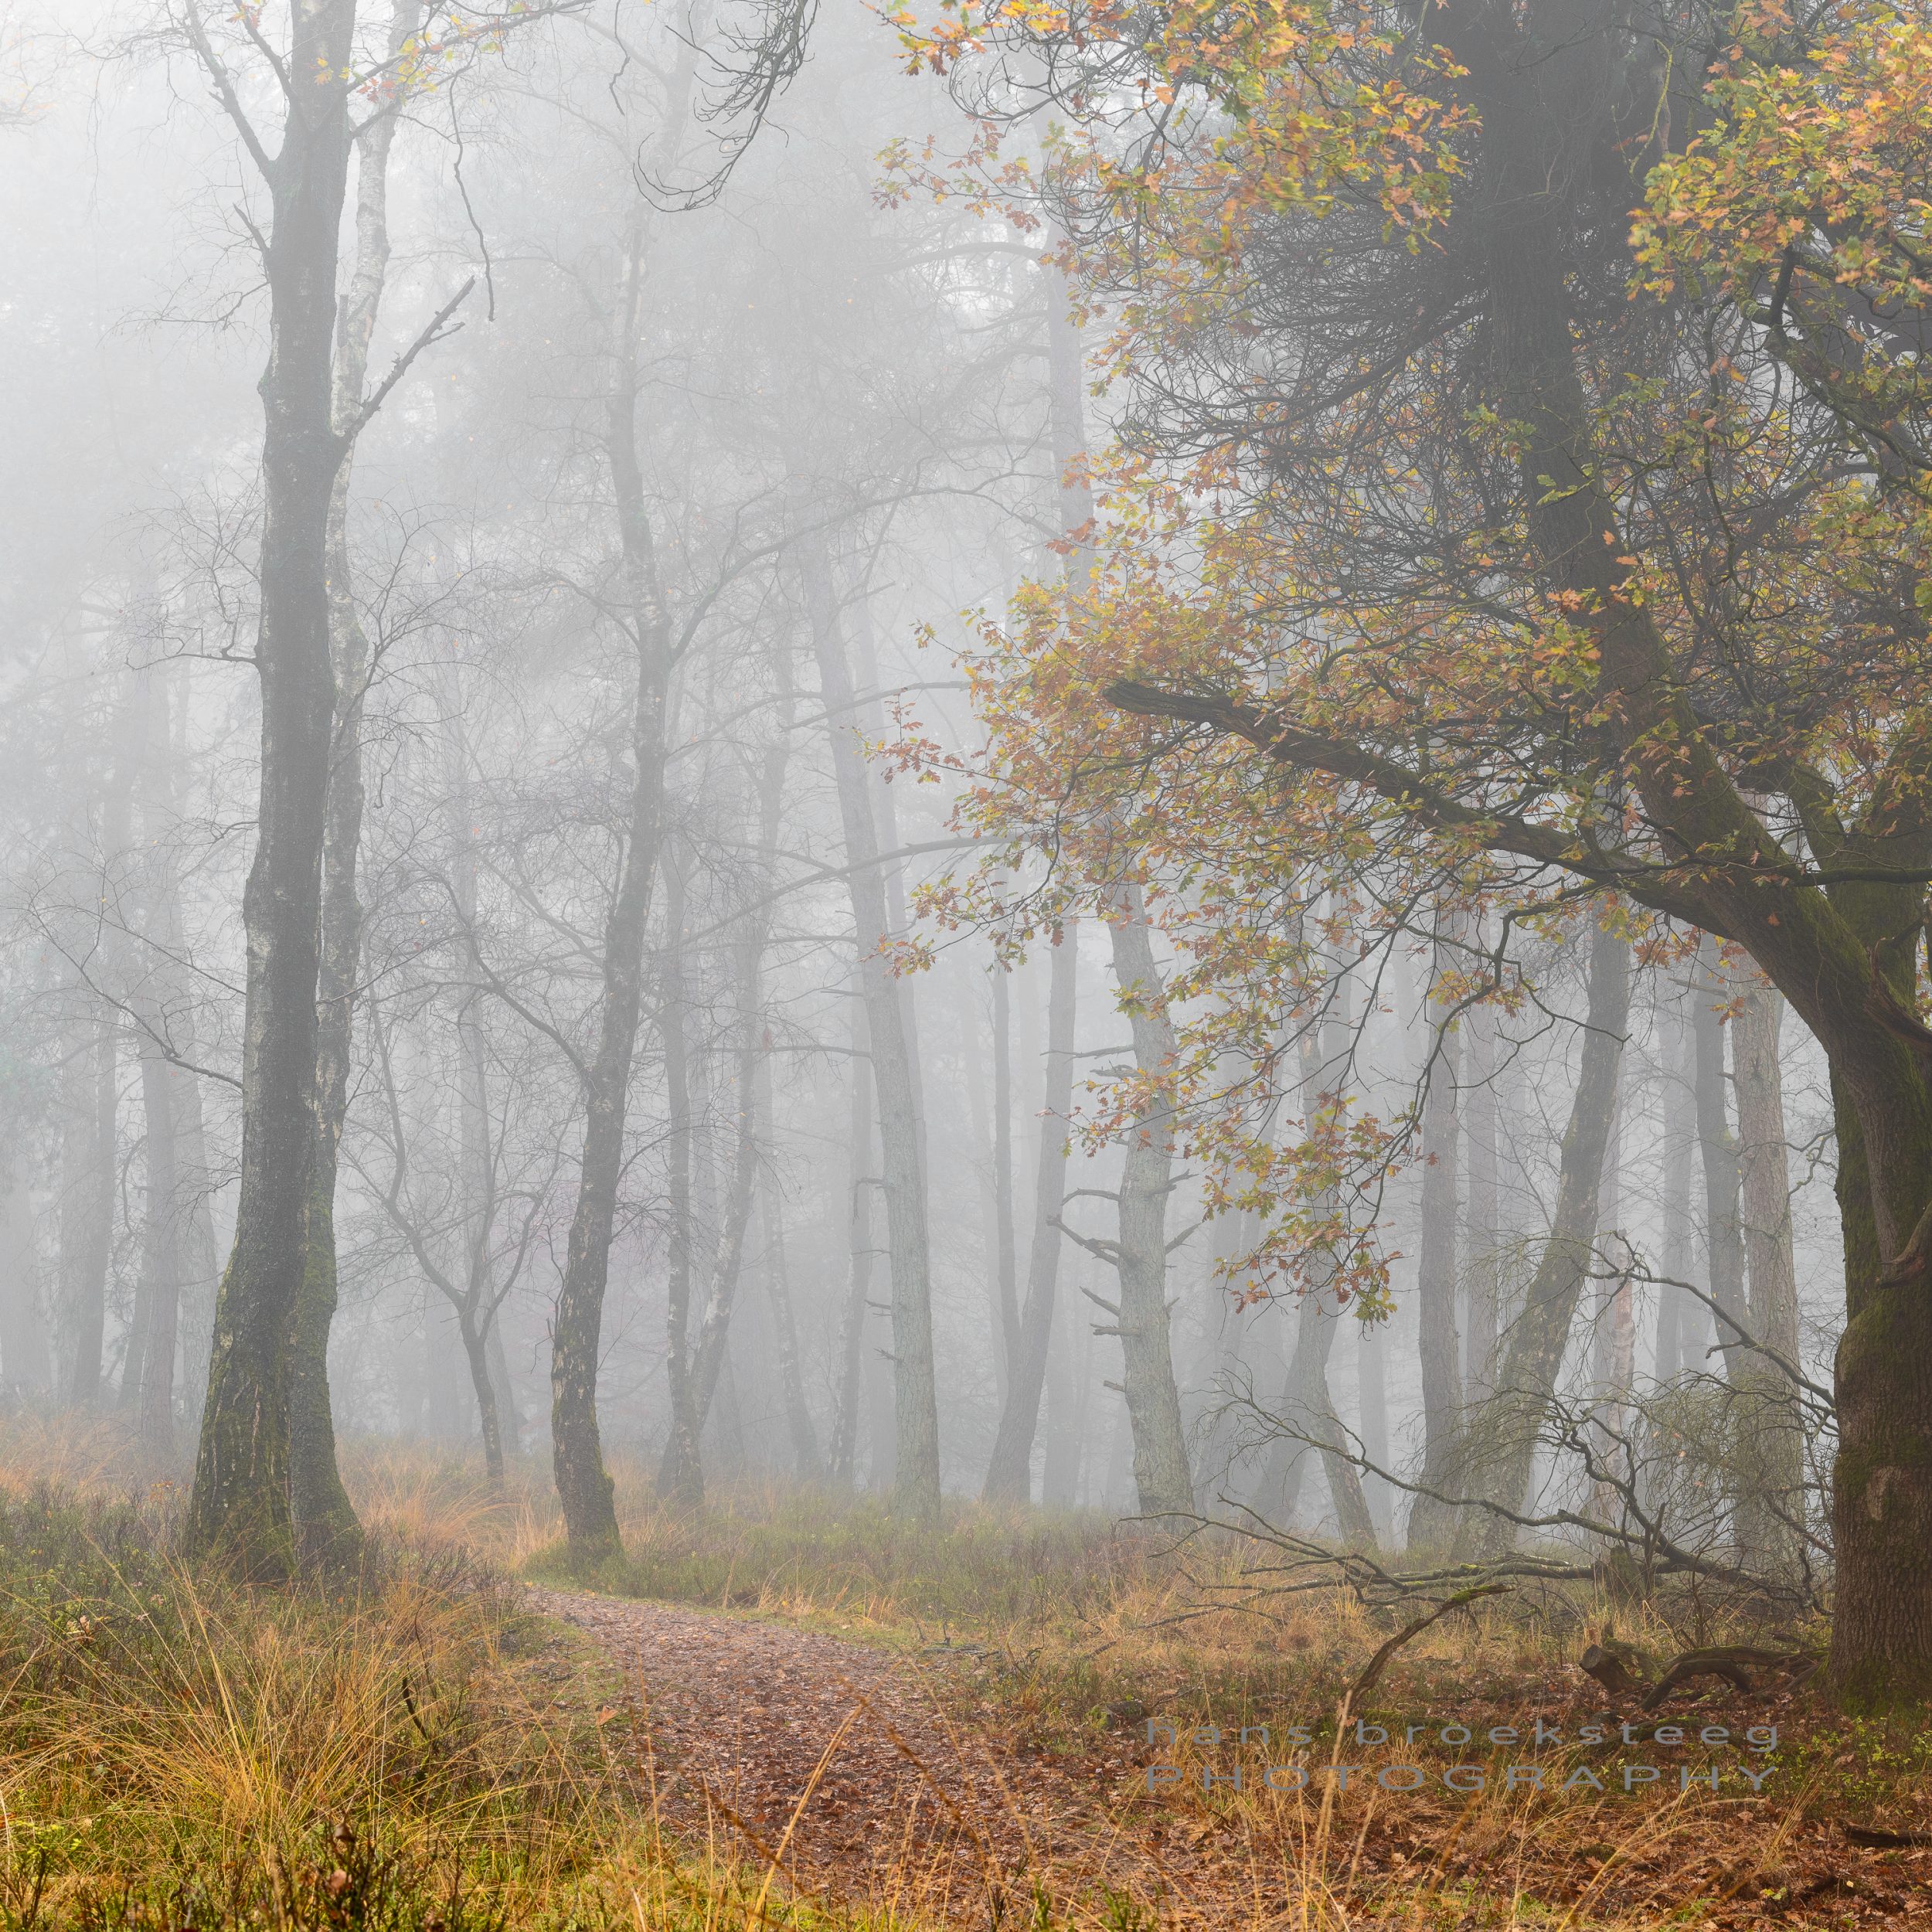 Misty woodland scene